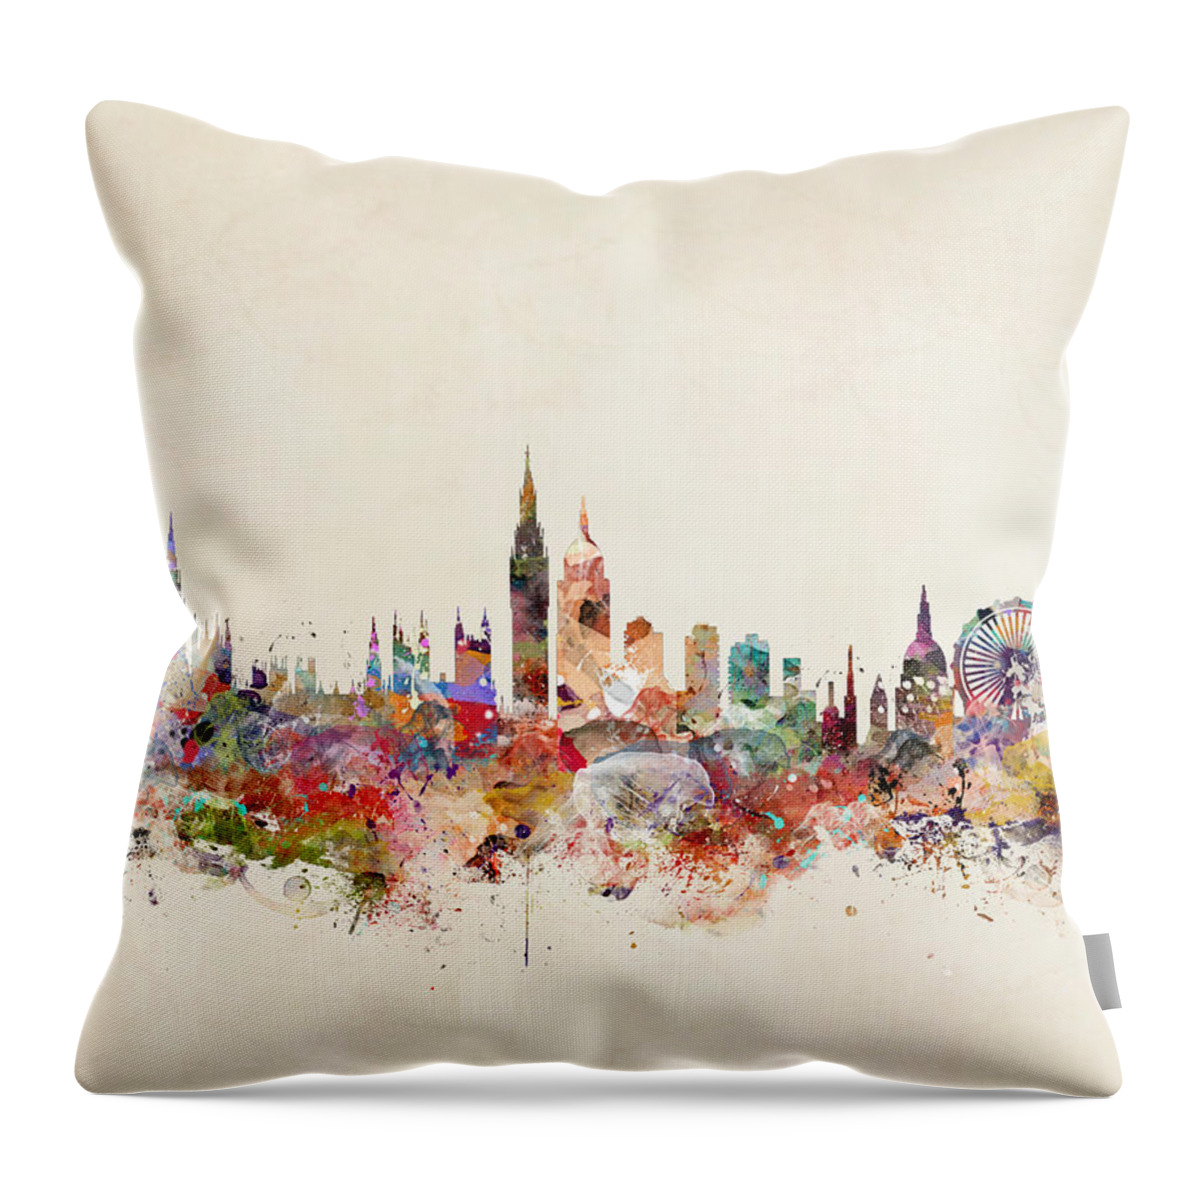 London City Skyline Throw Pillow featuring the painting London England City Skyline by Bri Buckley